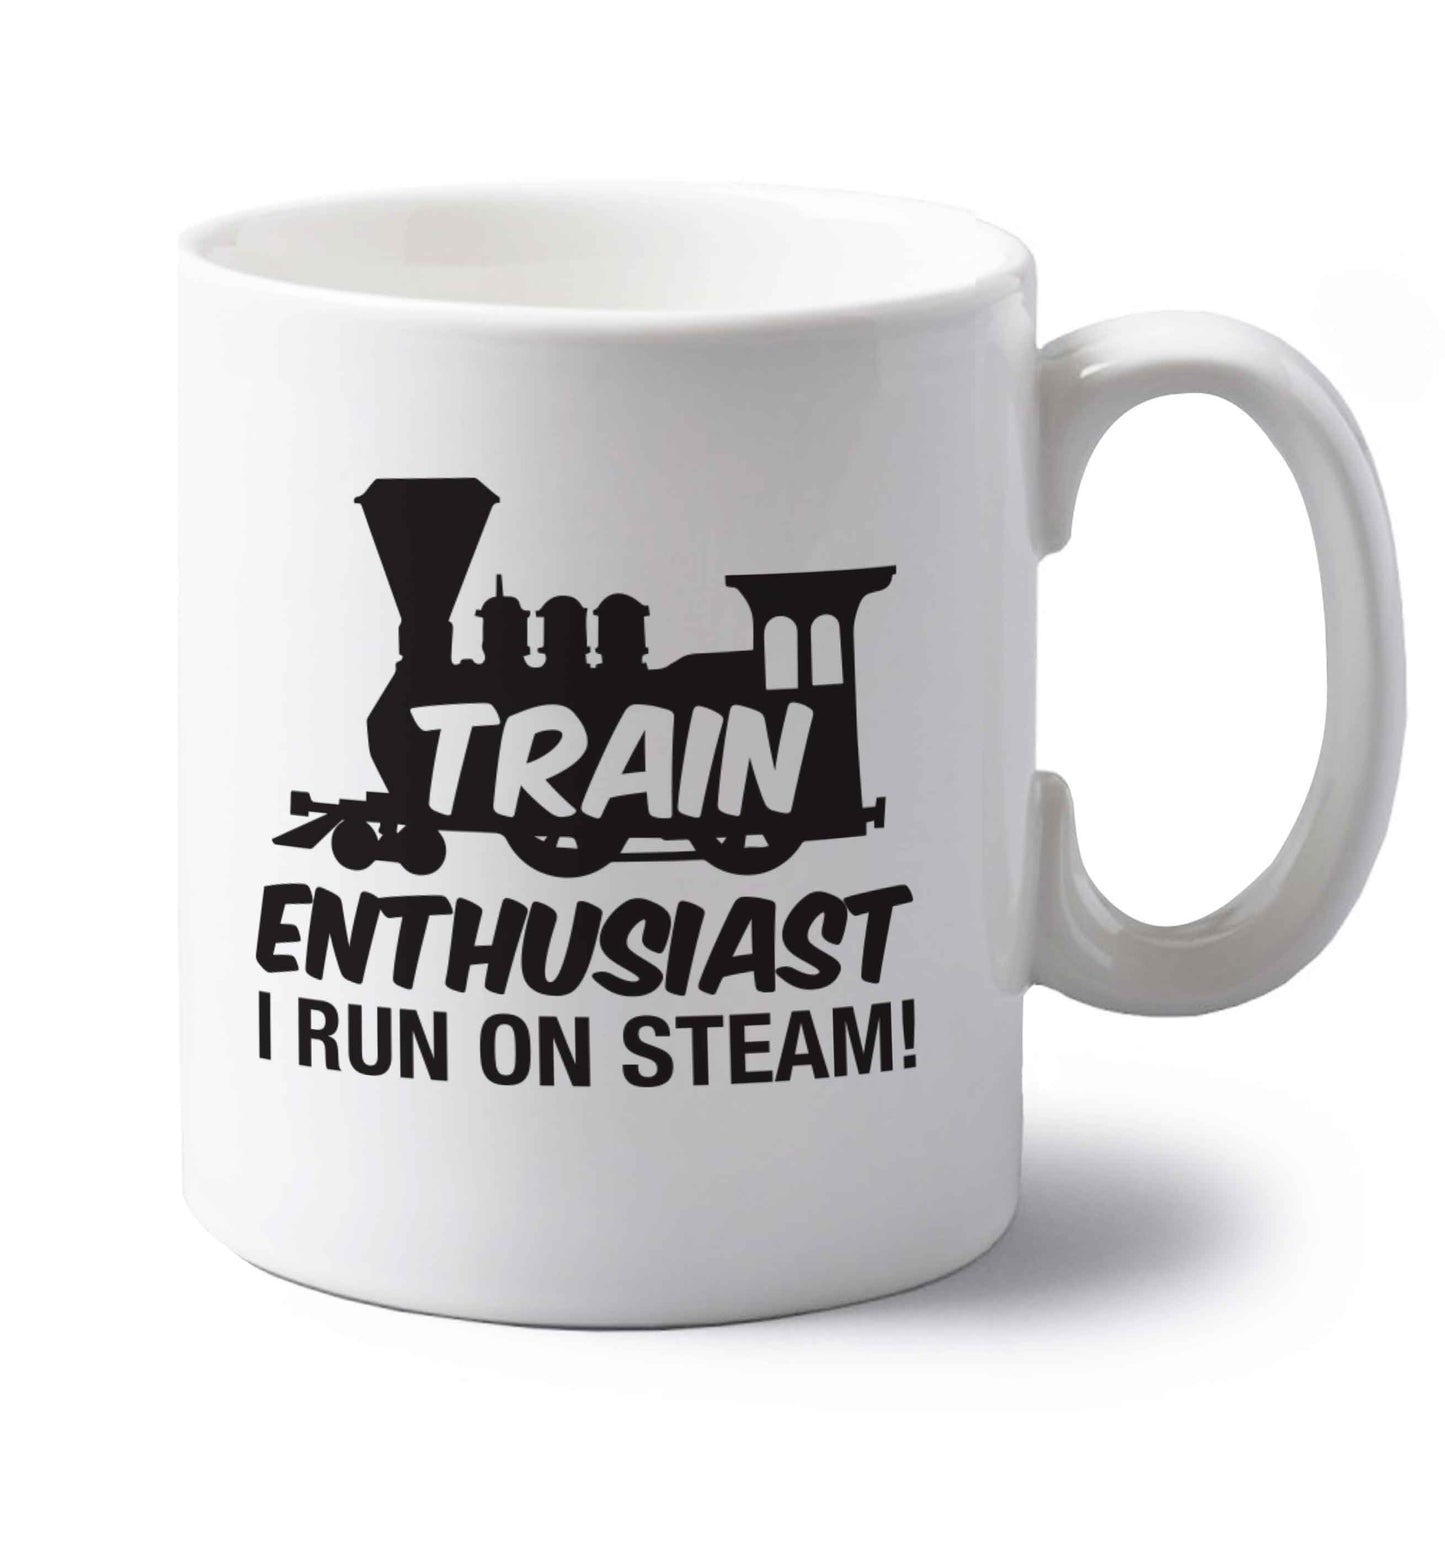 Train enthusiast I run on steam left handed white ceramic mug 